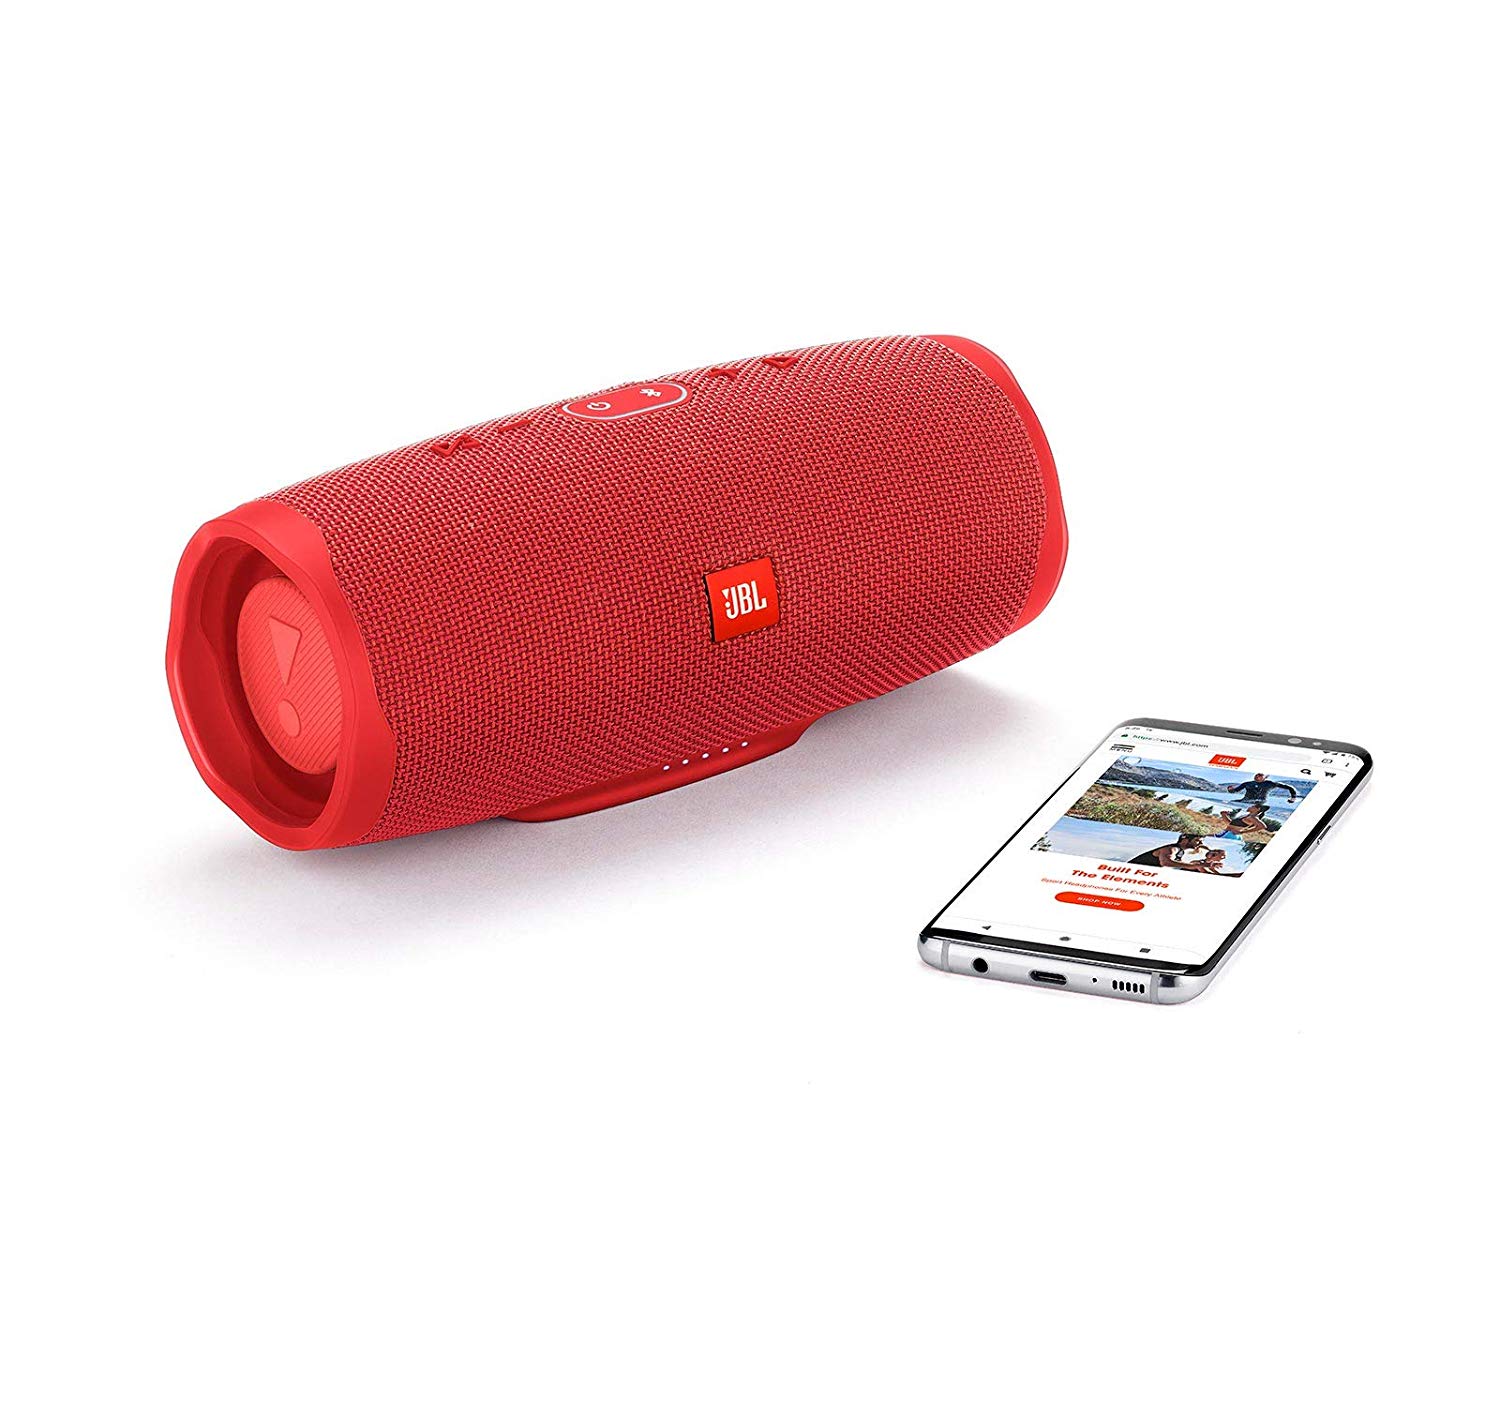 JBL Charge 4 Portable Waterproof Wireless Bluetooth Speaker - Red - image 3 of 5